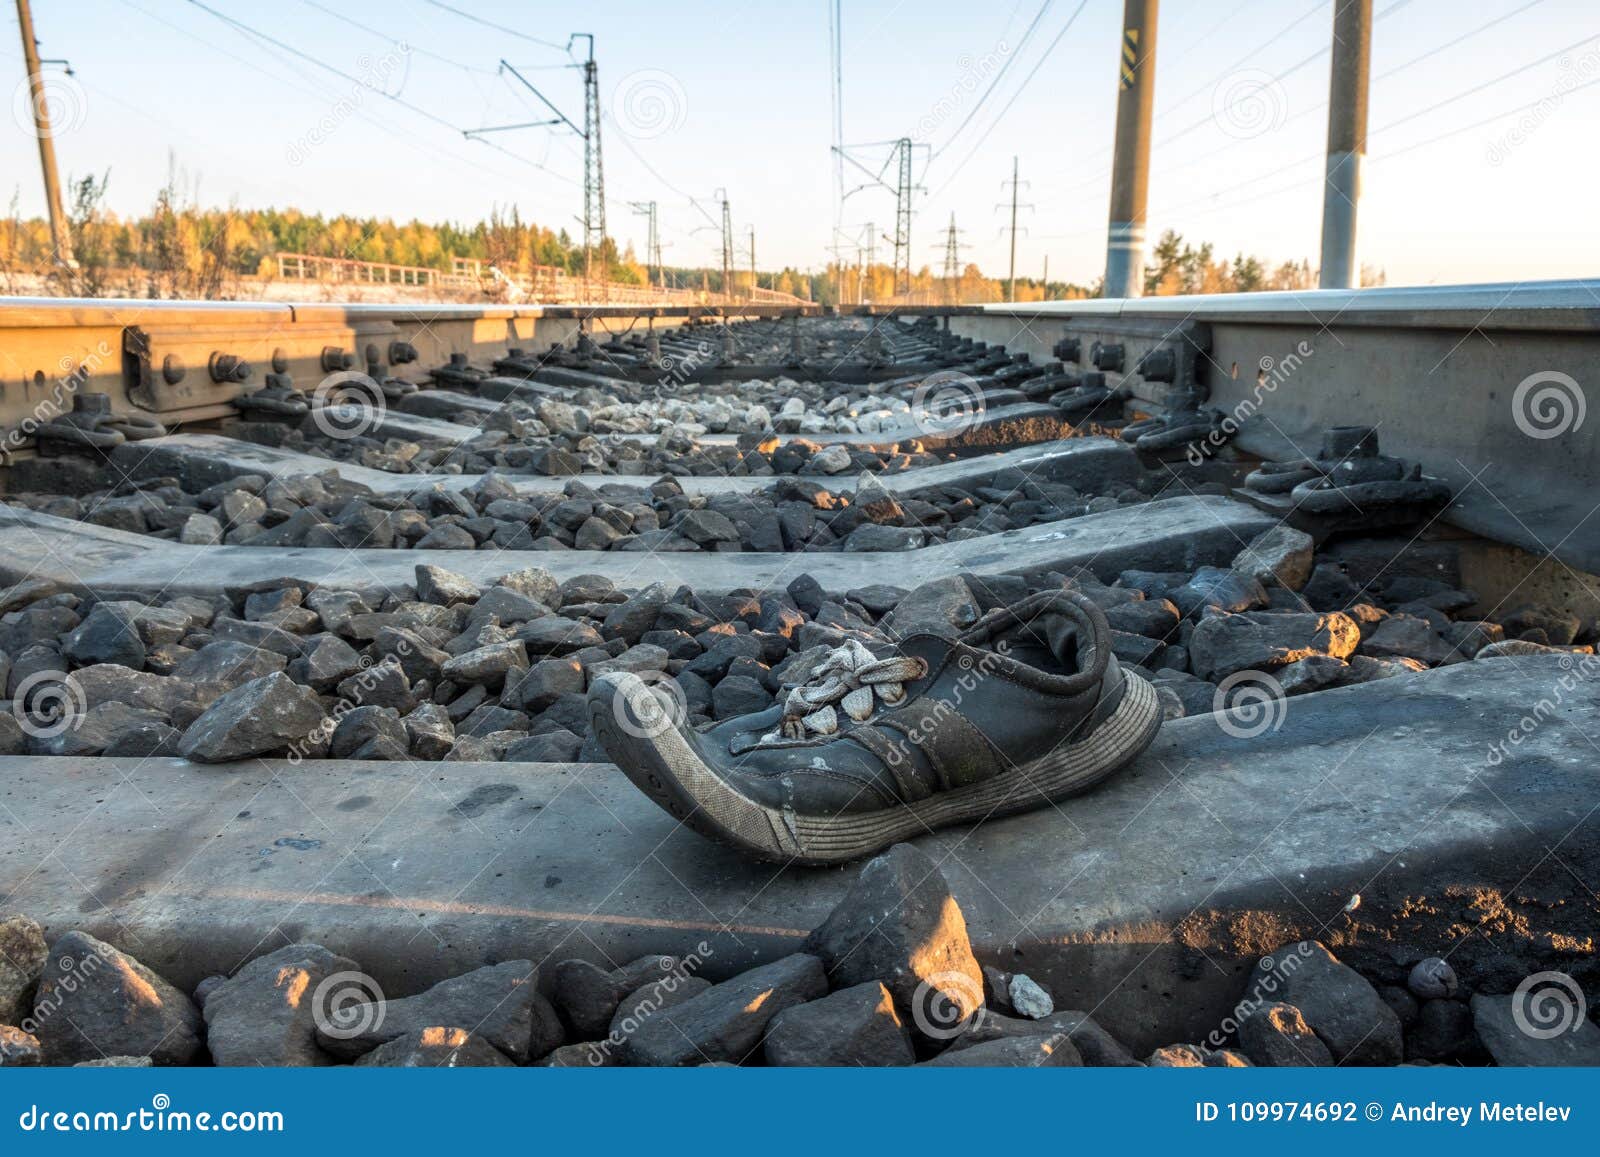 the rail shoes